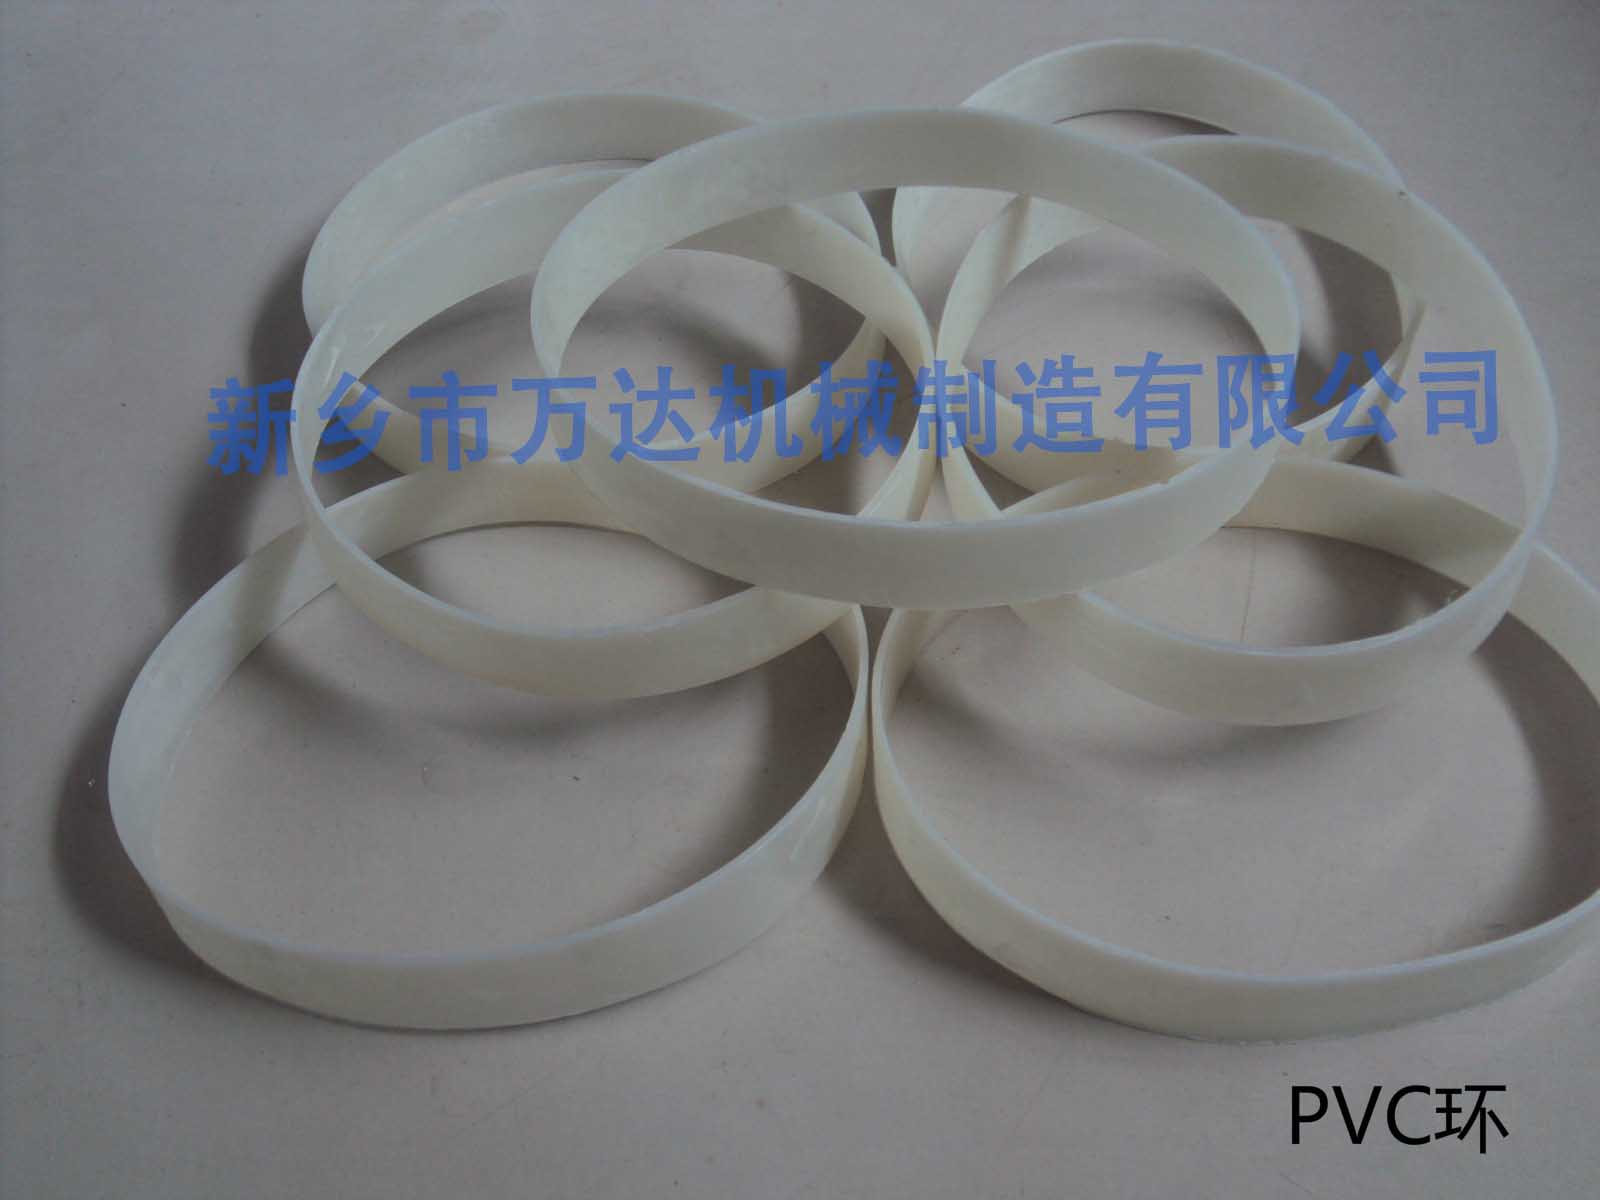 PVC環.jpg